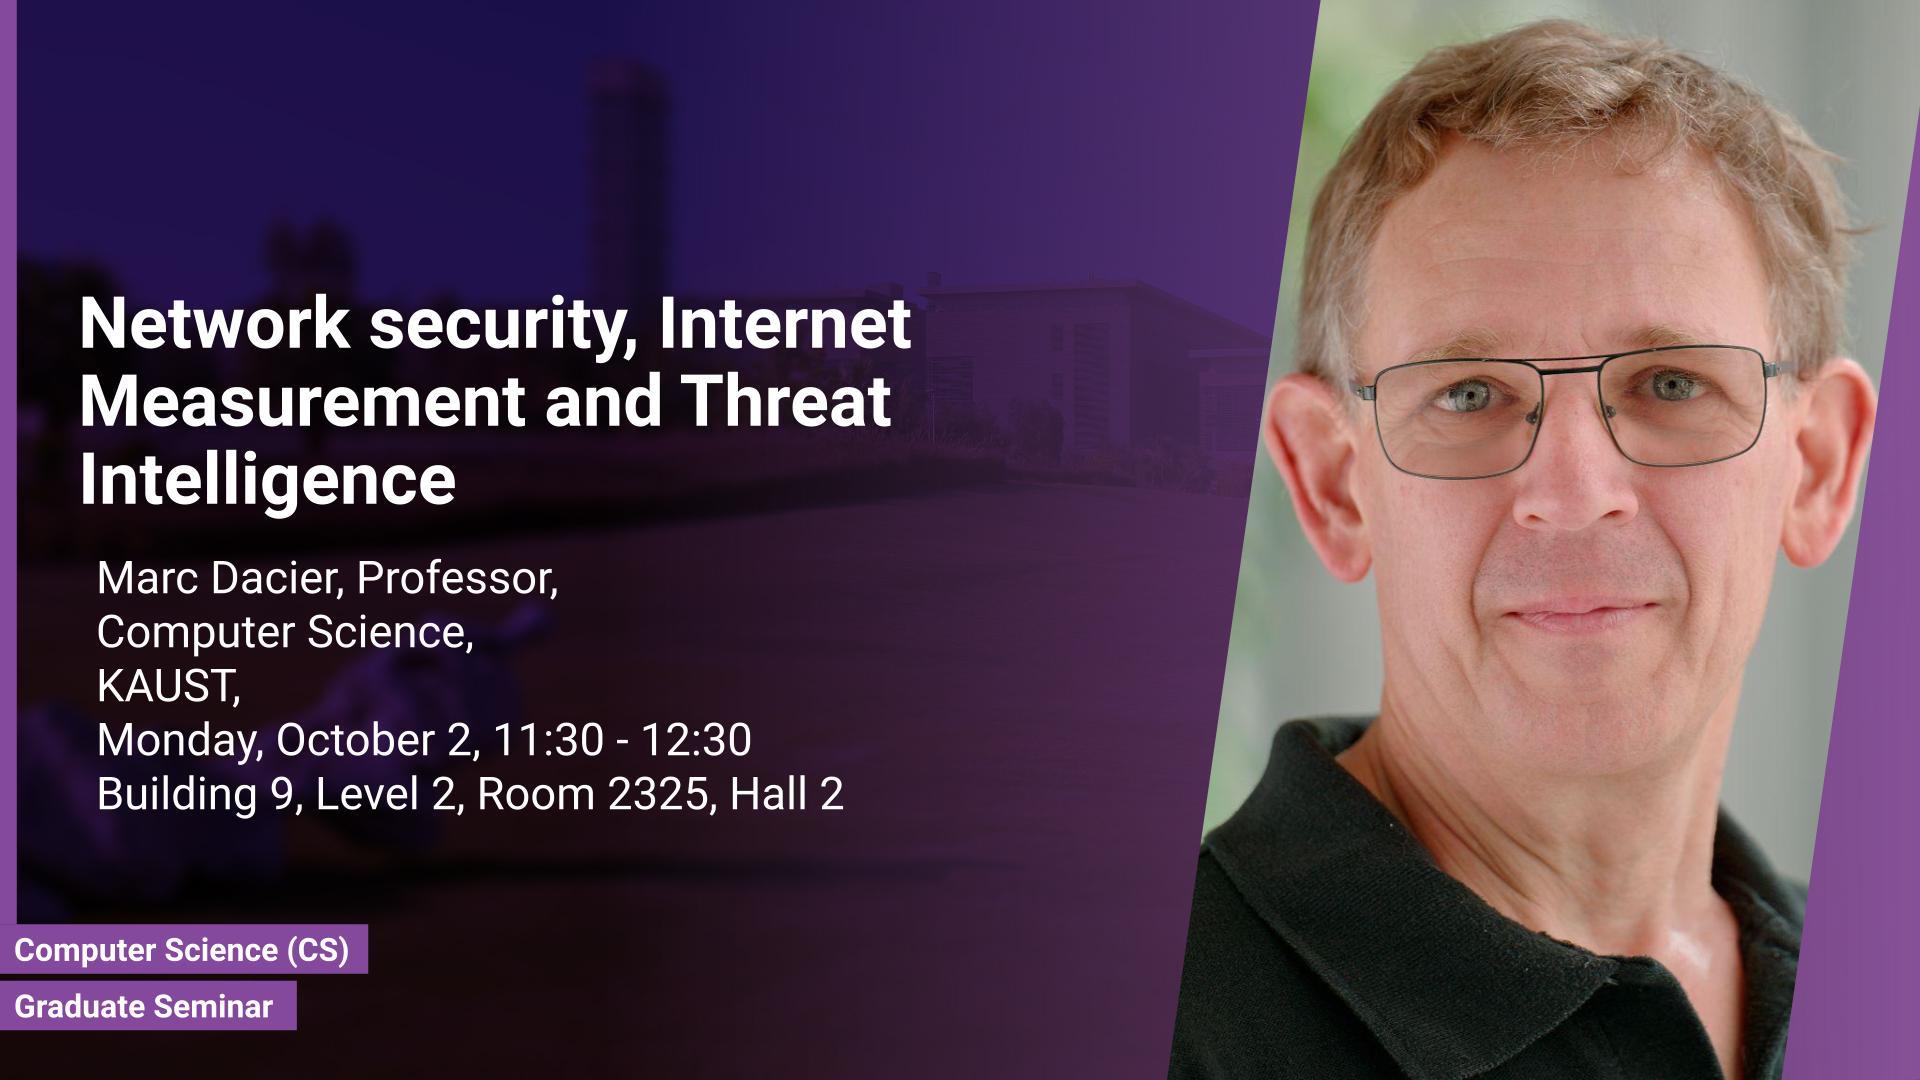 KAUST-CEMSE-CS-Graduate-Seminar-Marc-Dacier-Network-Security-Internet-Measurement-and-Threat-Intelligence.jpg